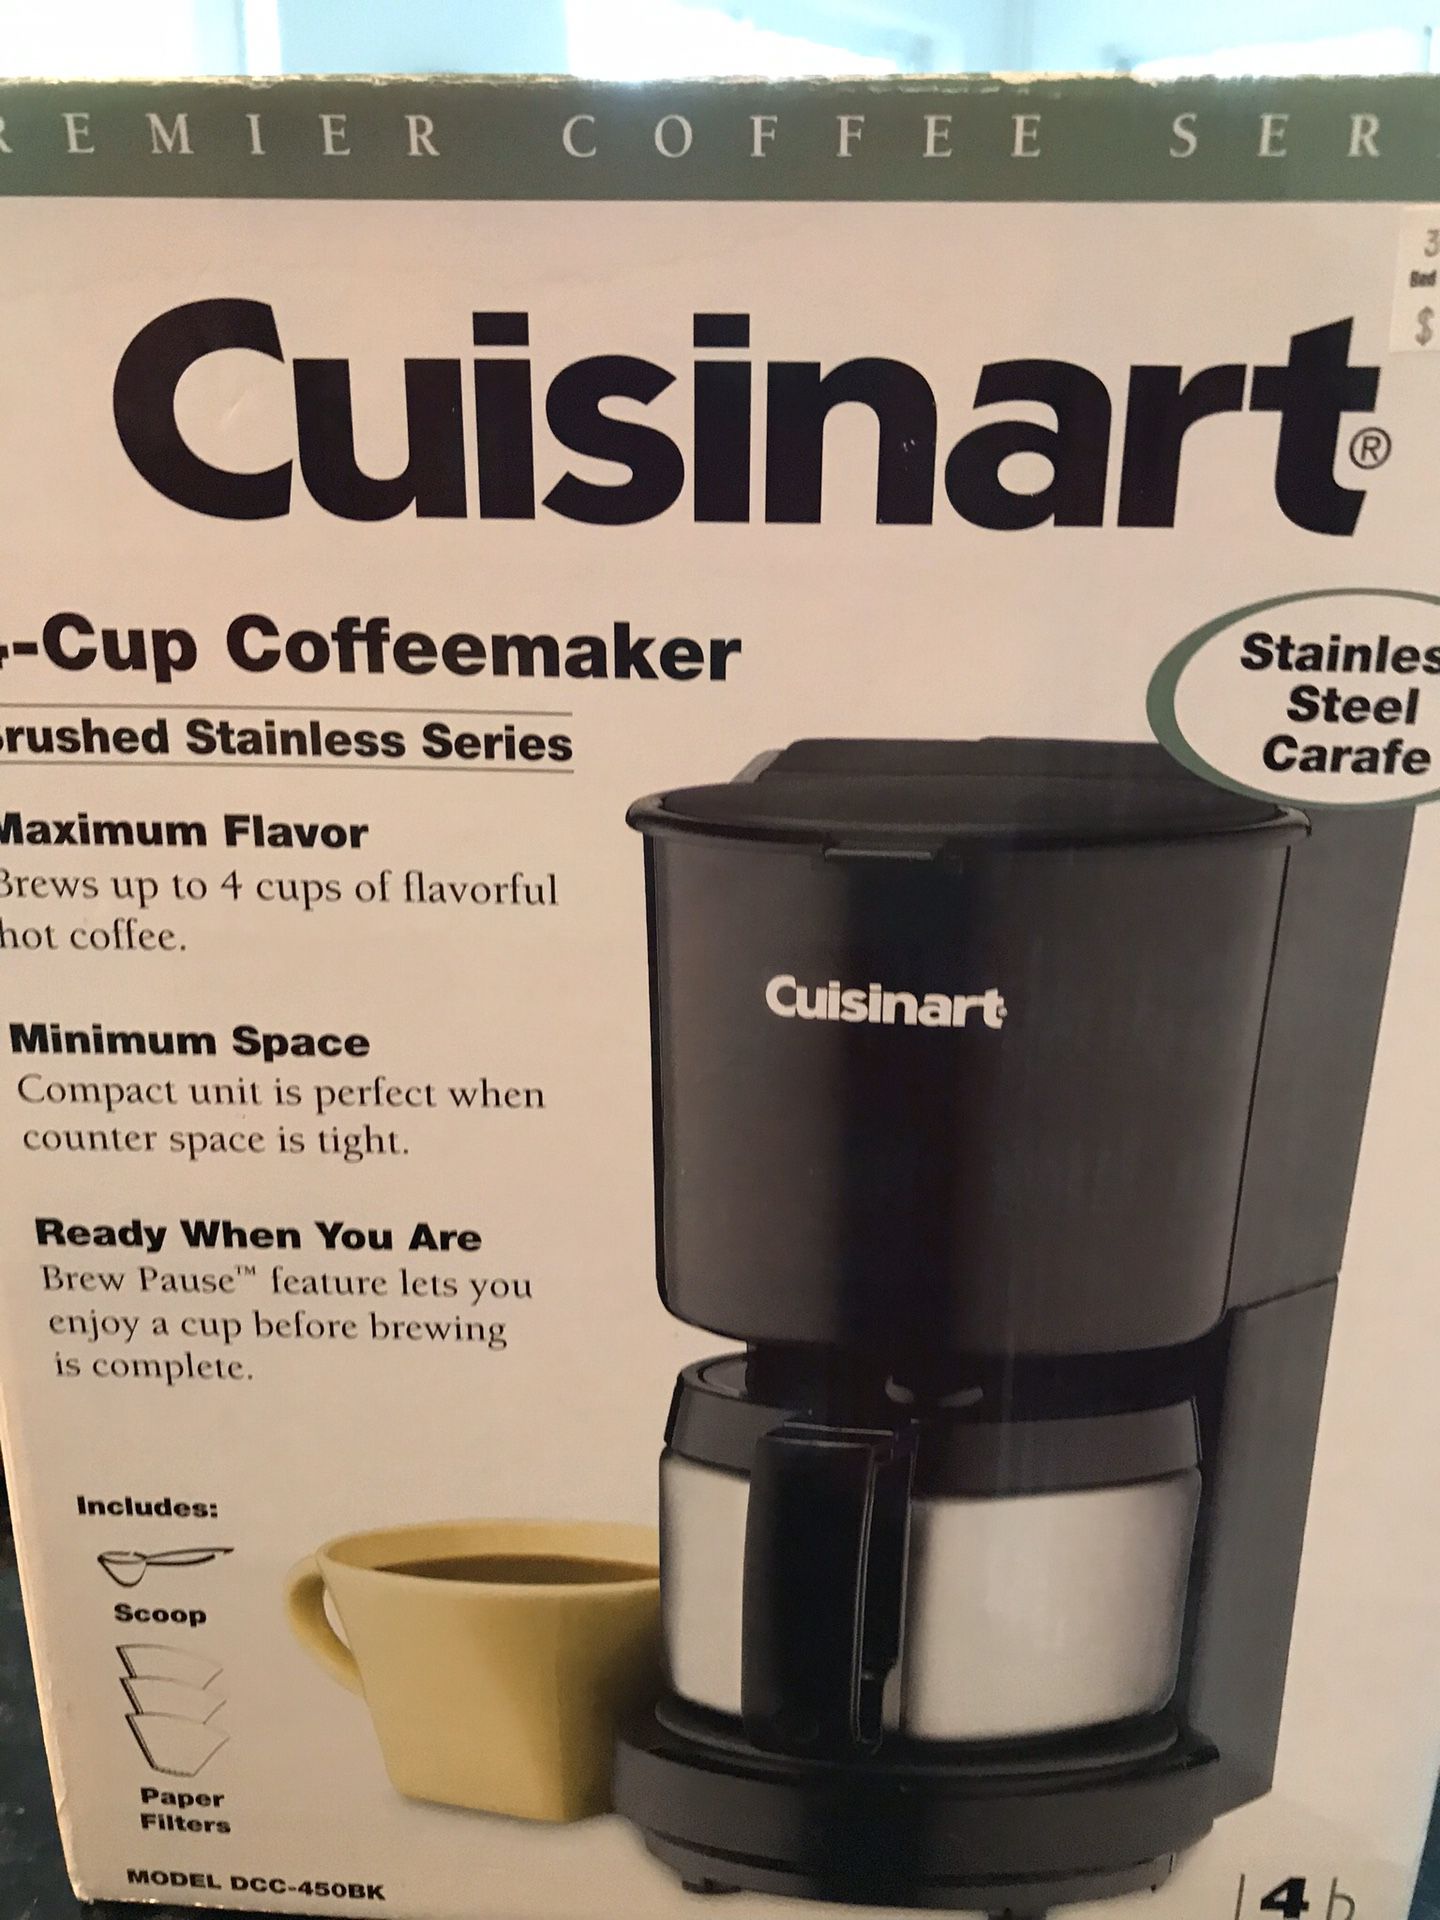 Cuisinart coffee maker -4 cup